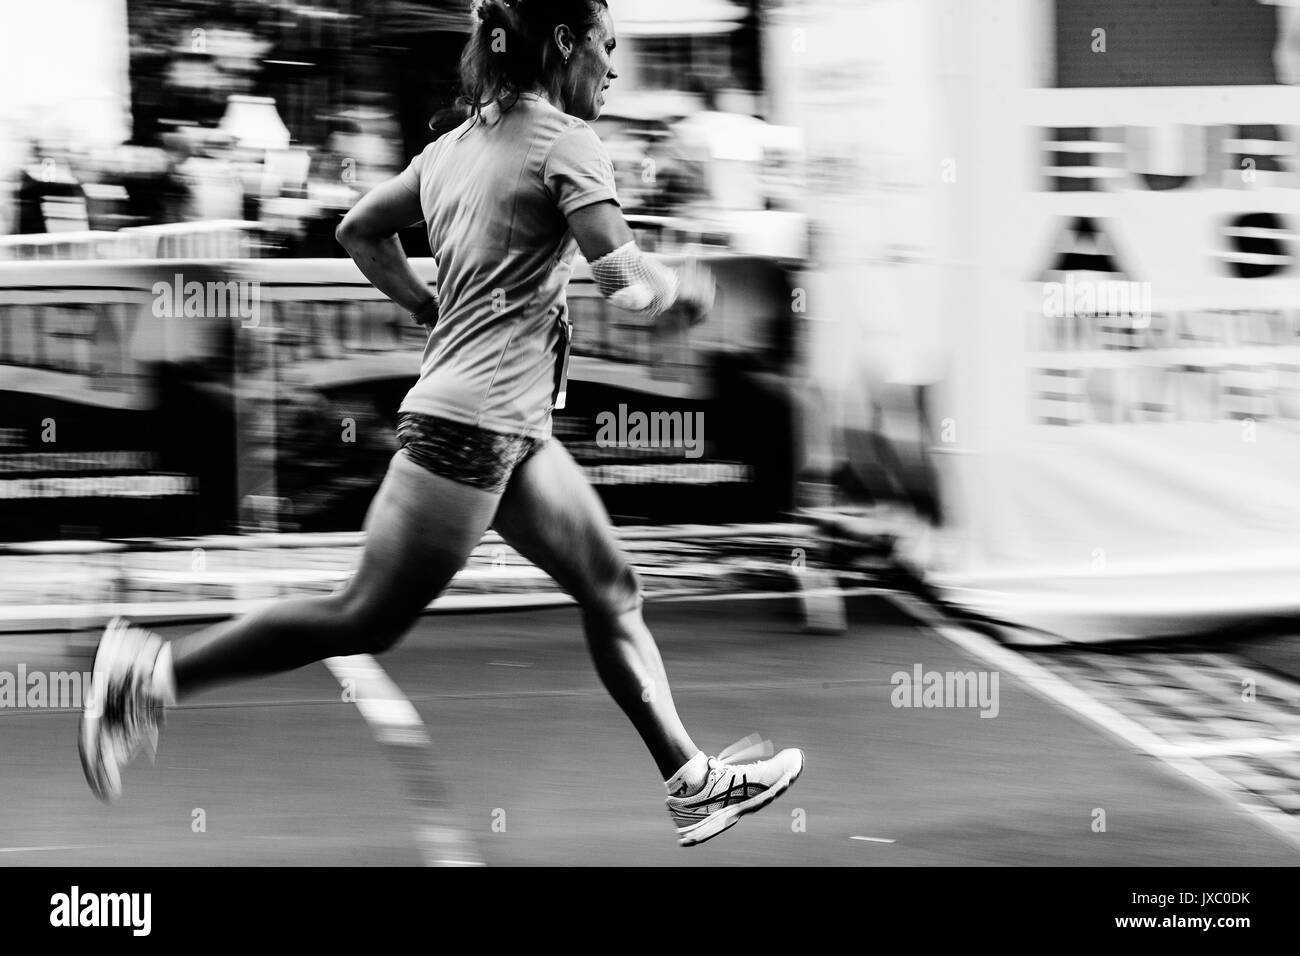 blurred motion of woman runner running on street in Europe-Asia Marathon Stock Photo